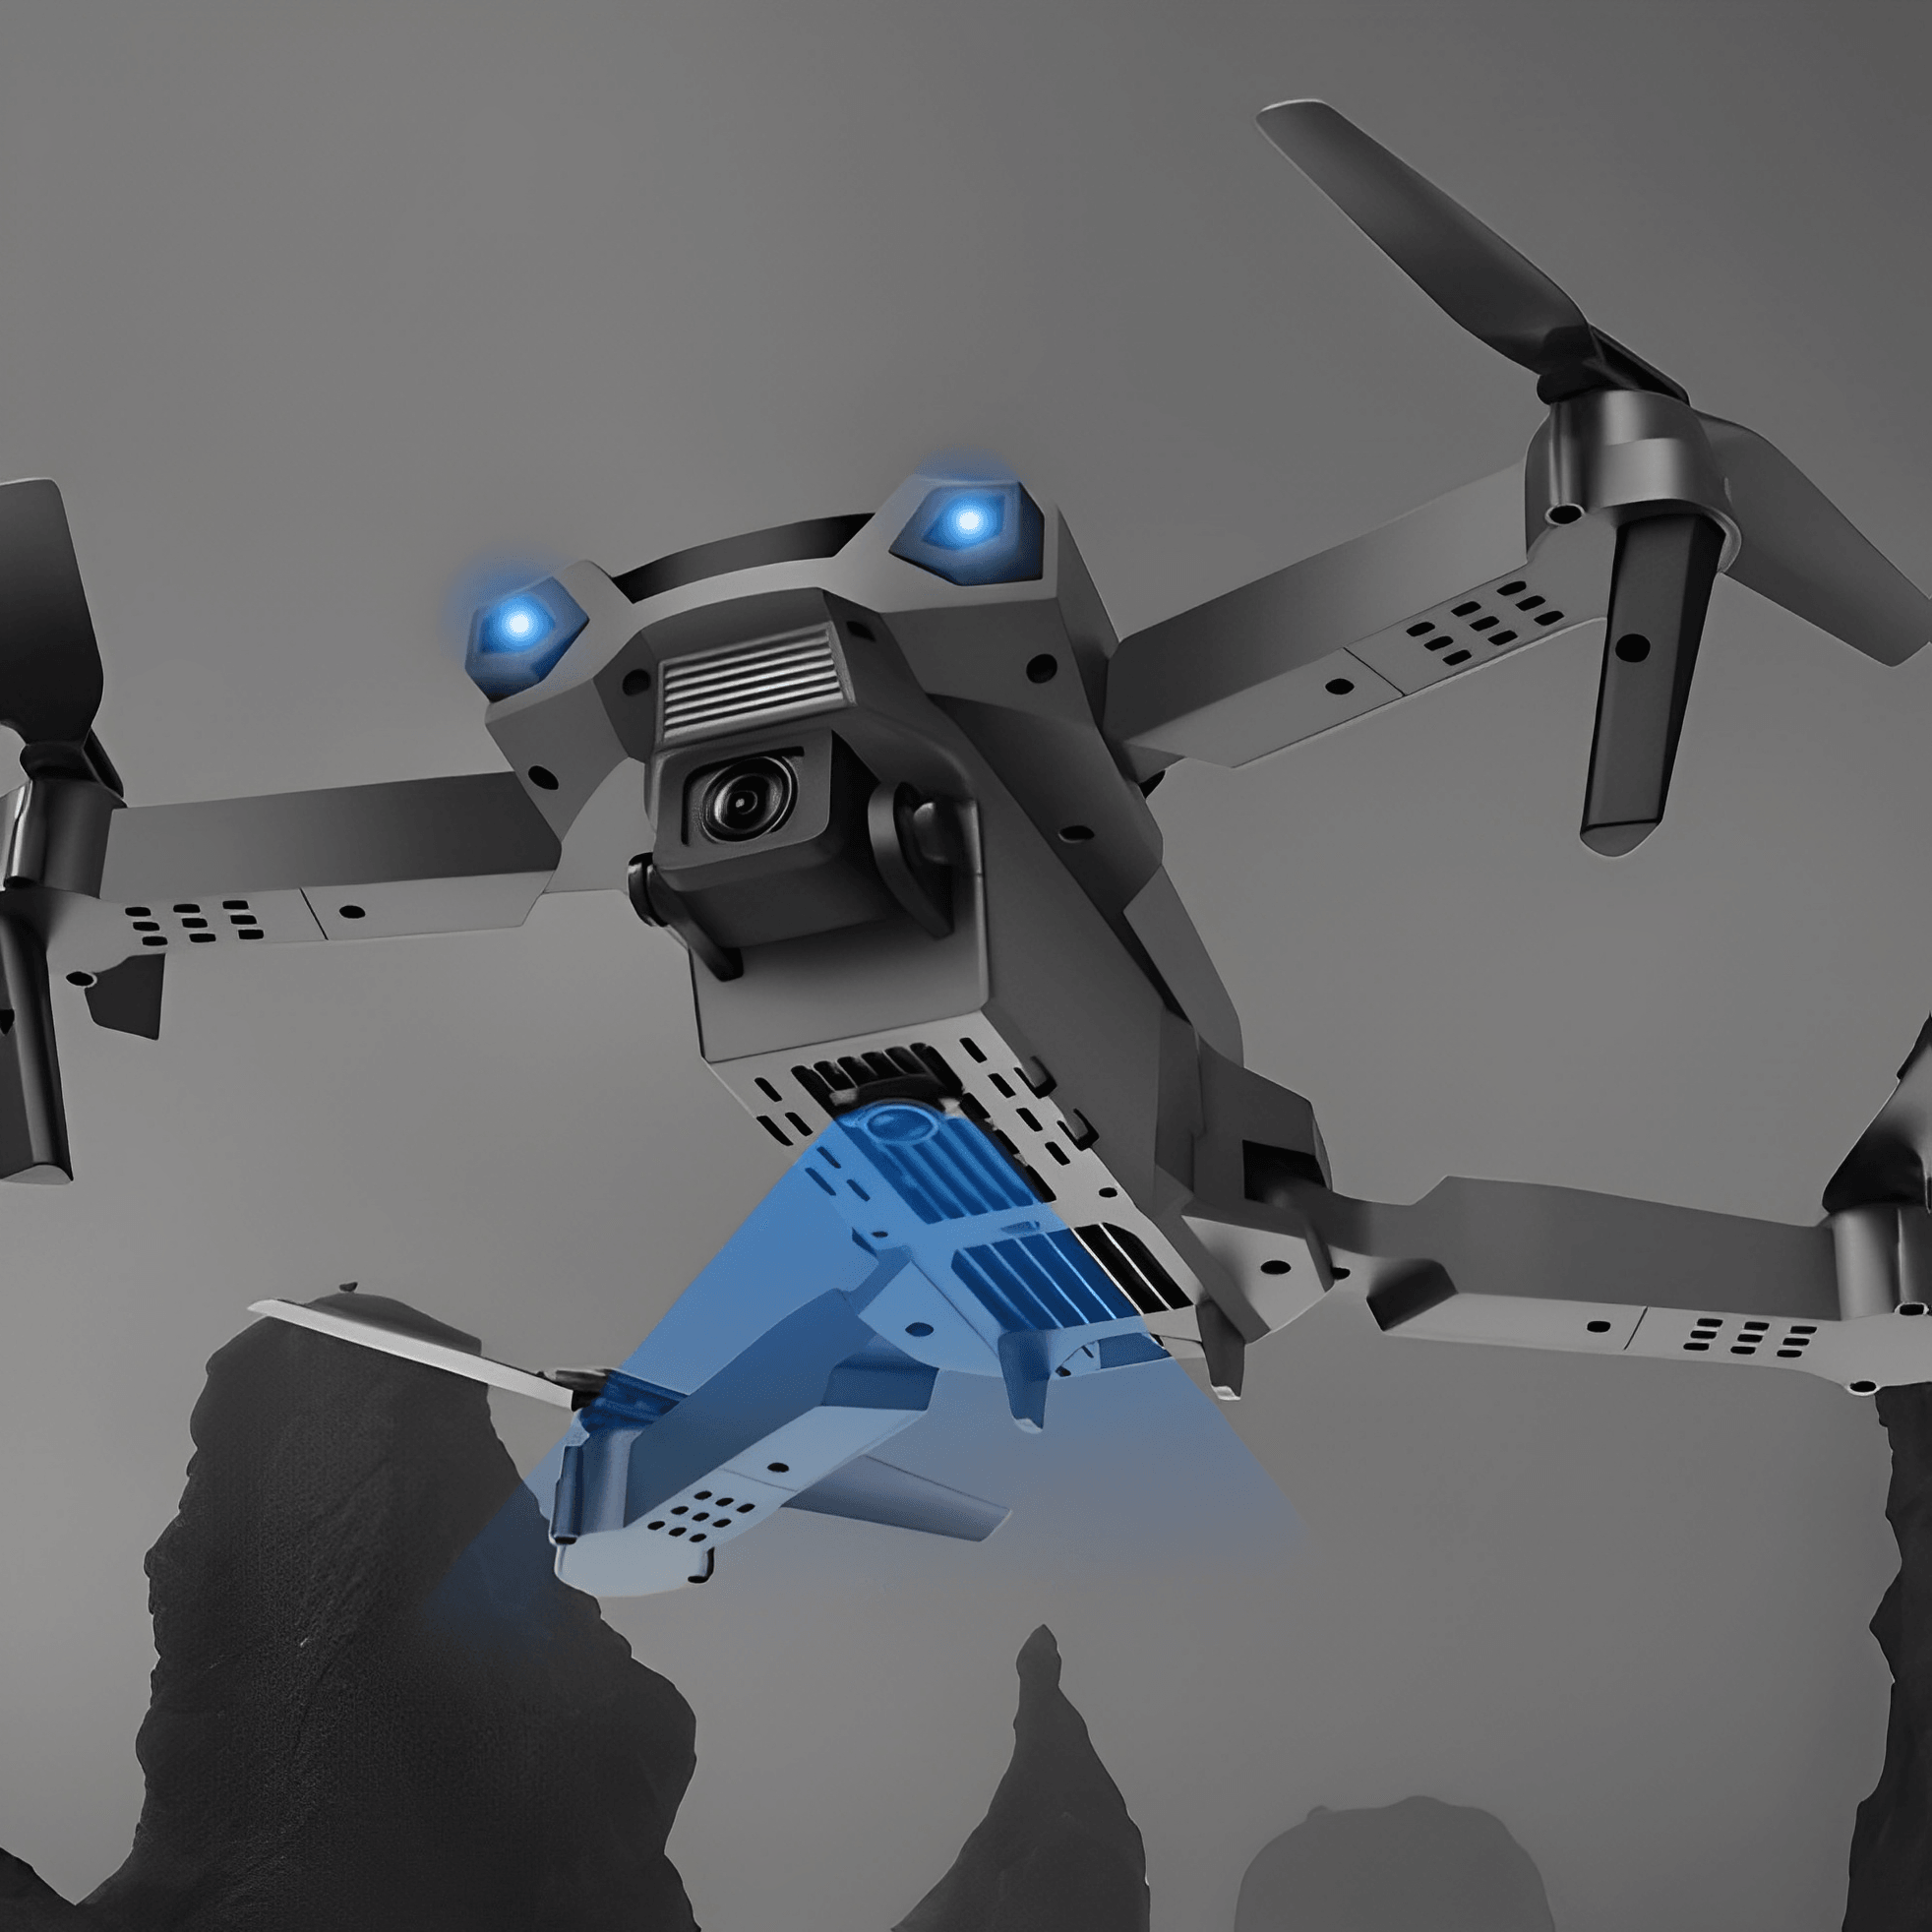 Drone Profissional Com Sensor de Obstáculo Câmera Full HD 4k Wifi/ AvangerCopter (Oferta)